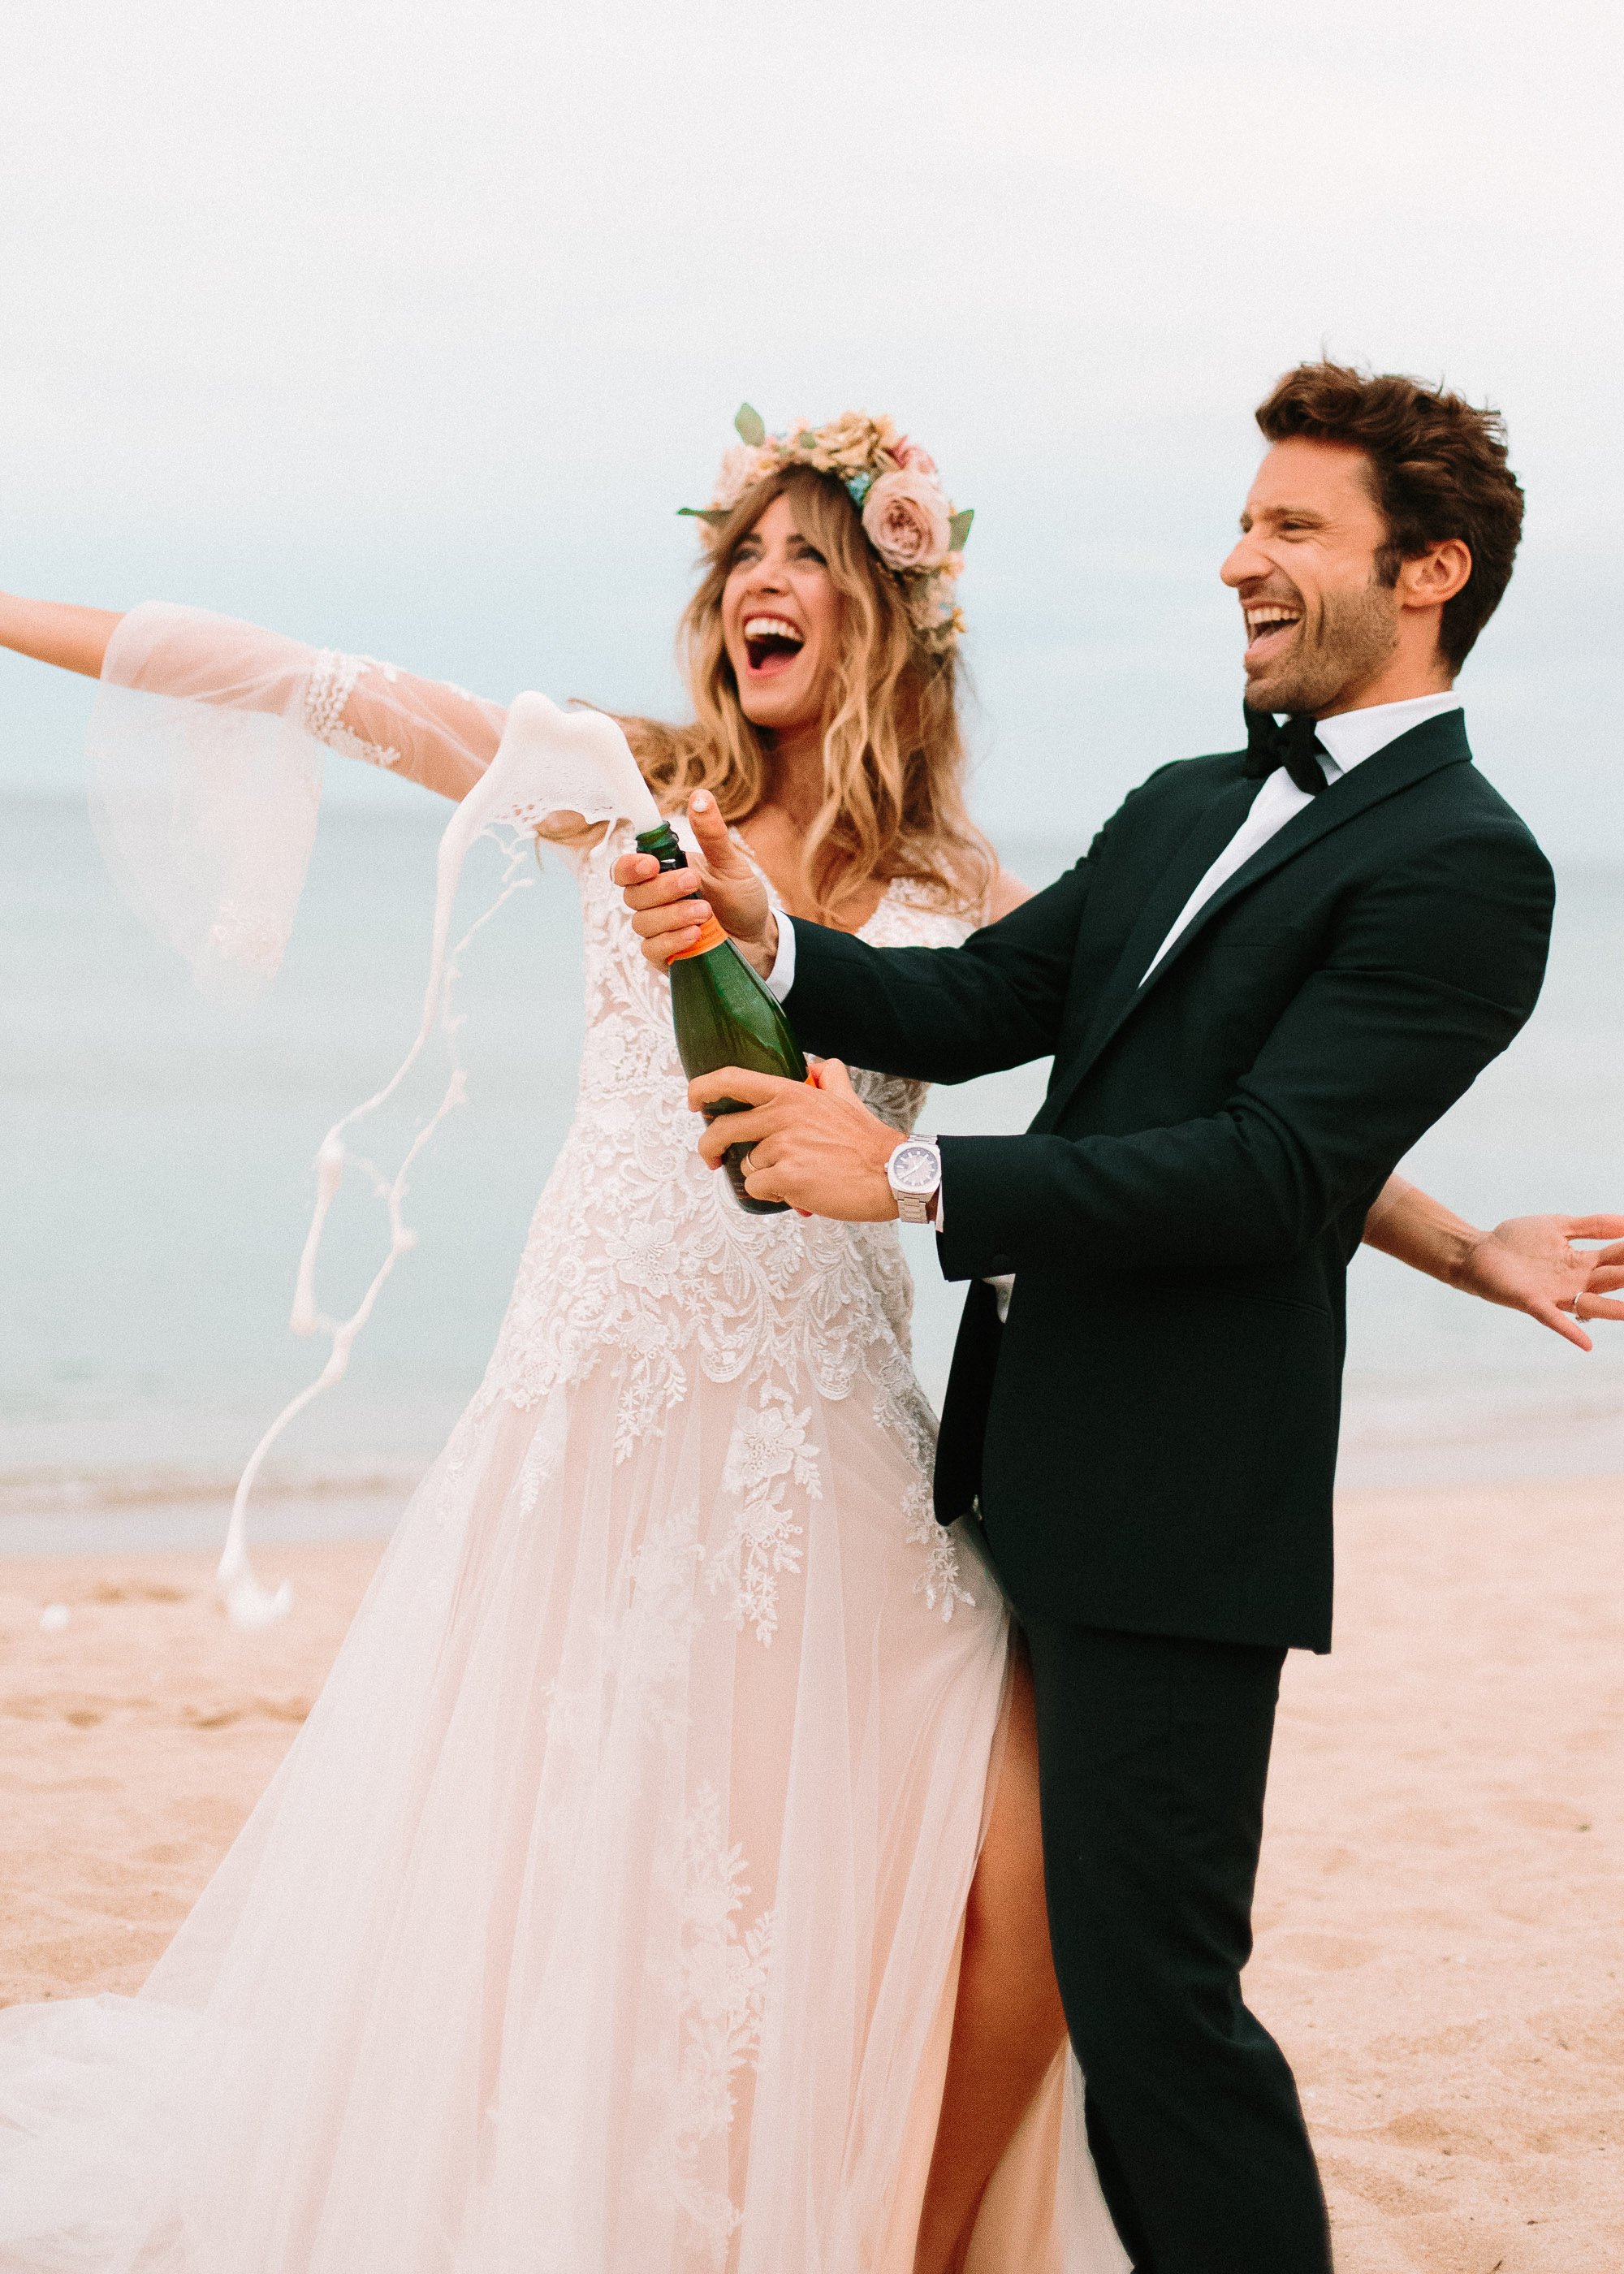 Wedding-photography-just-married-wedding-toast-champagne-beach-wedding.jpg